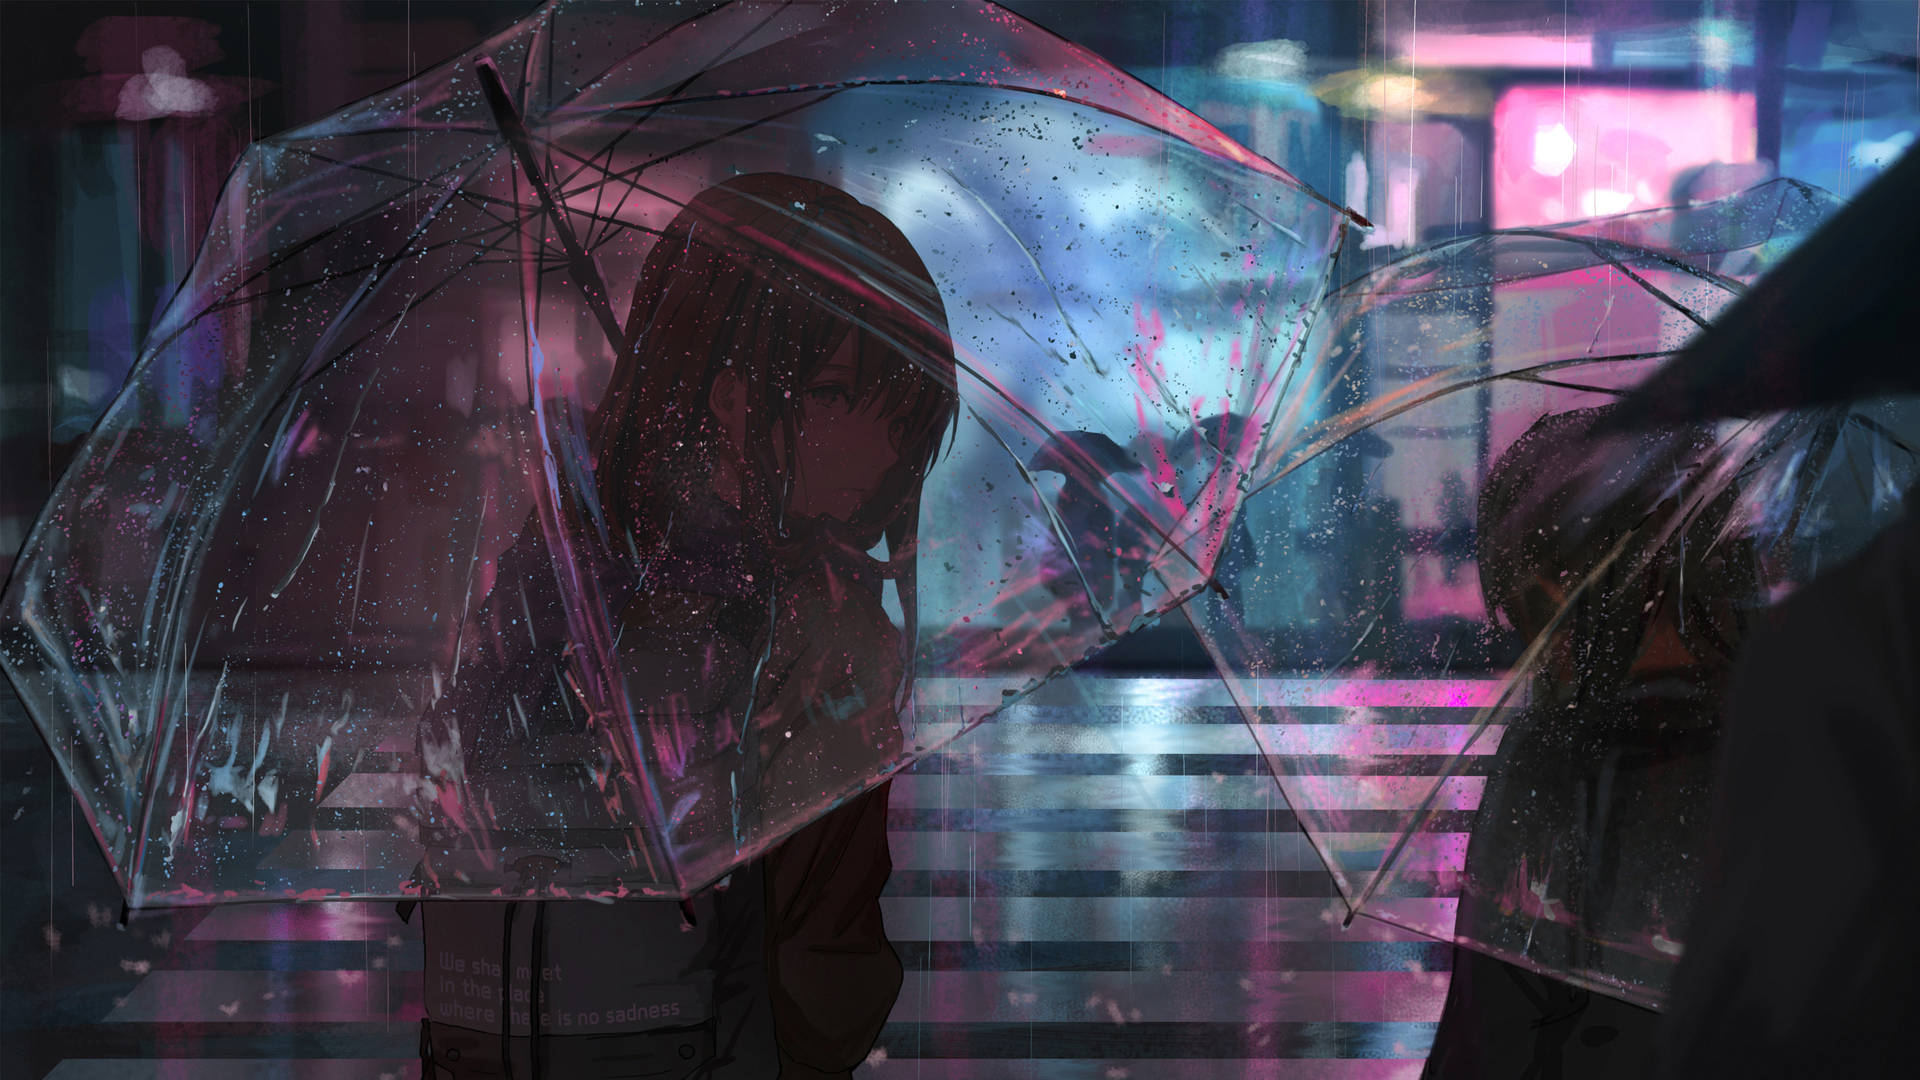 Zweipersonen, Die Regenschirme Im Regen Halten Wallpaper